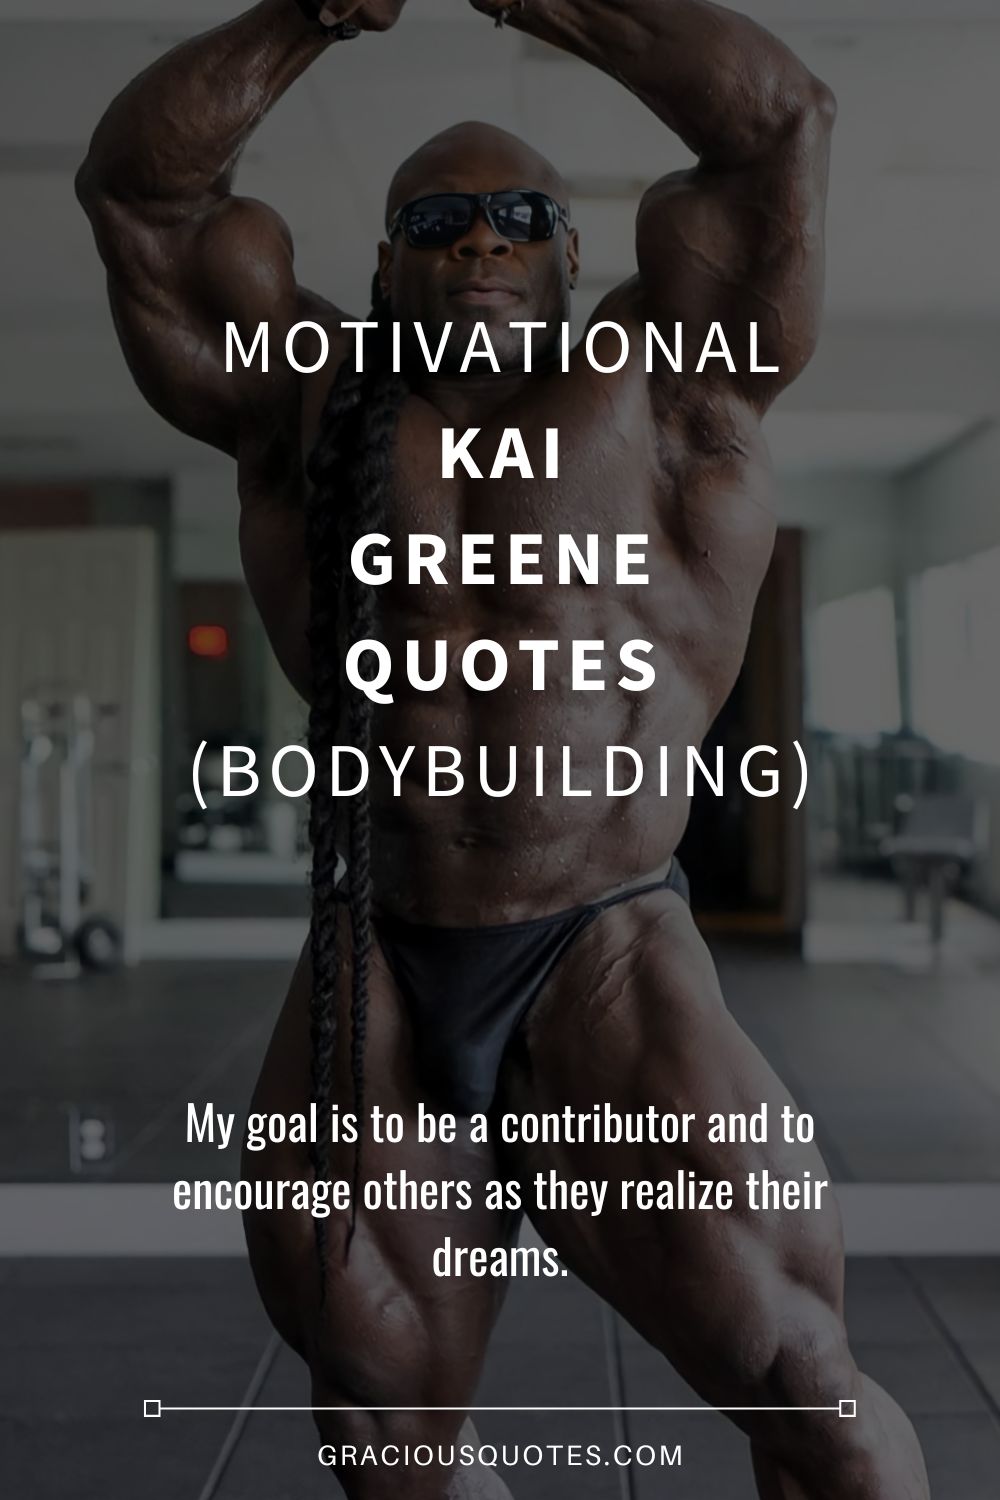 Motivational Kai Greene Quotes (BODYBUILDING) - Gracious Quotes